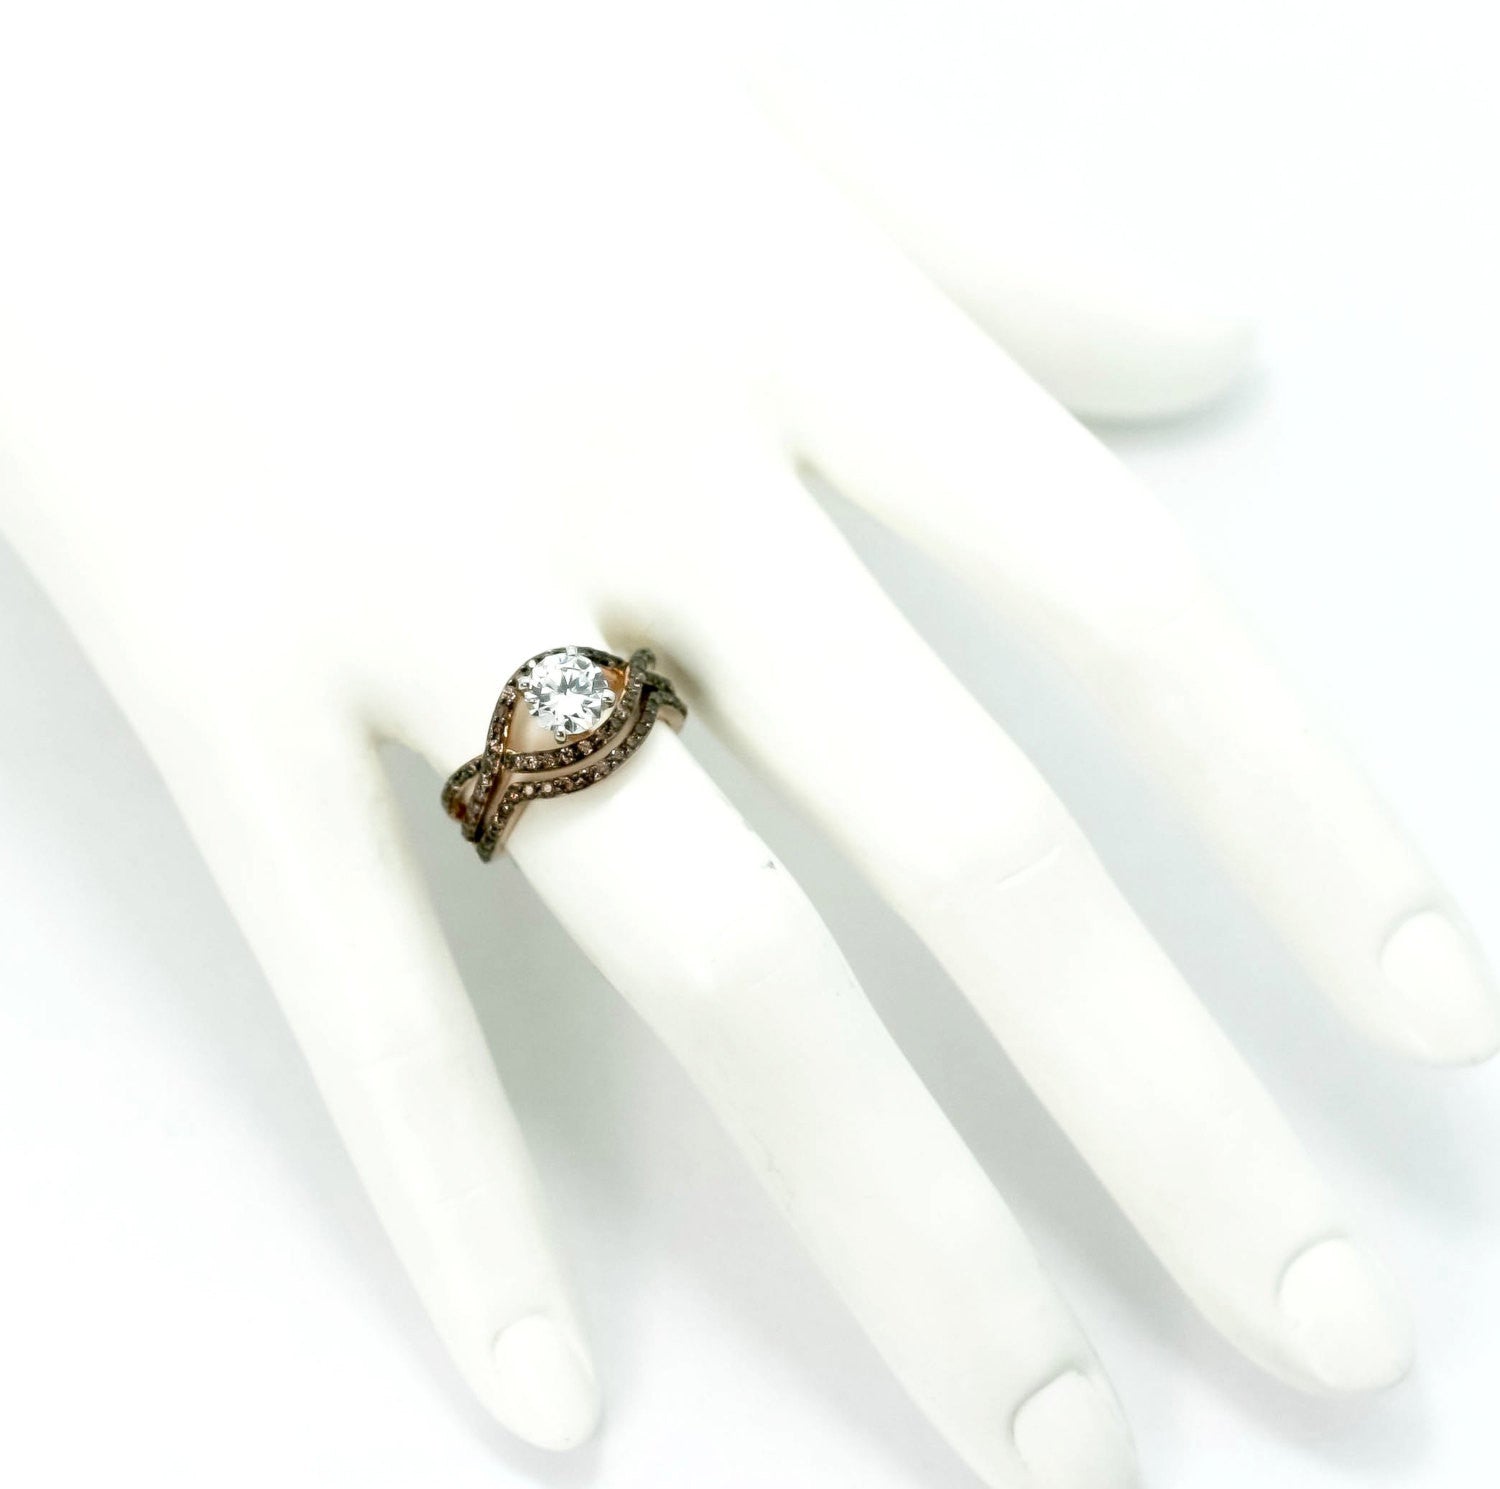 Unique Infinity Ring, Engagement / Wedding Set, Rose Gold, Fancy Color Brown Diamonds, 1 Carat Forever Brilliant Moissanite - FB94615